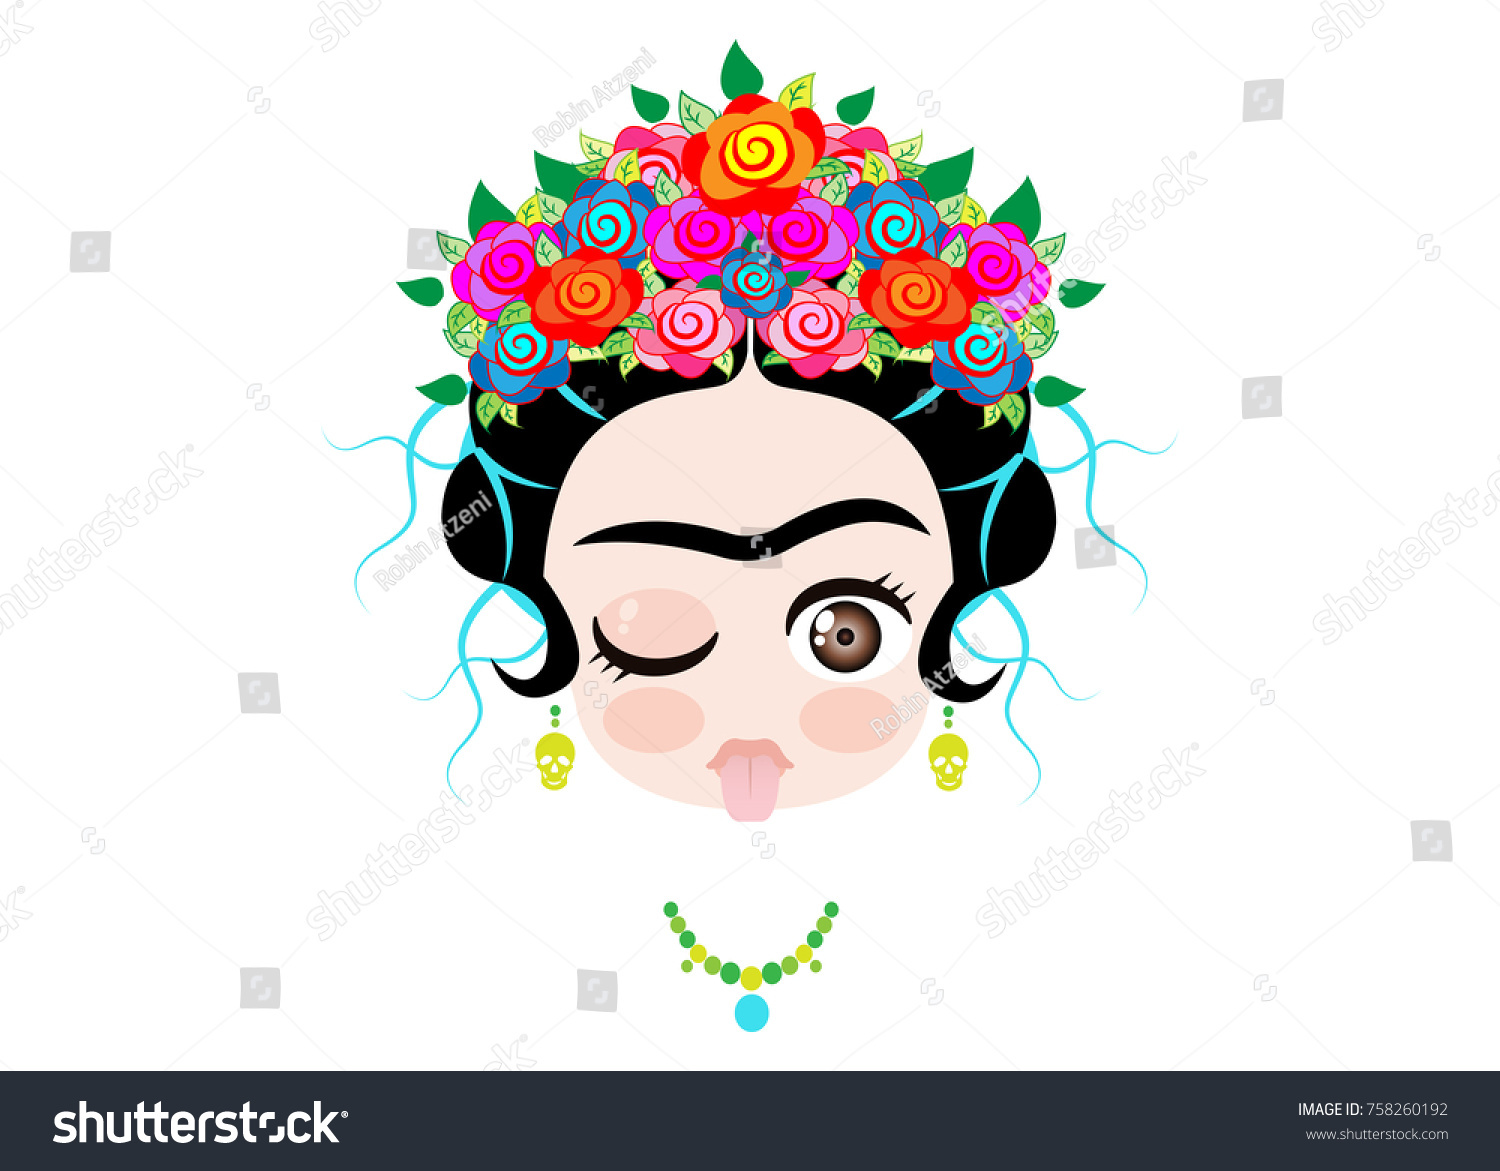 Download Emoji Baby Frida Kahlo Tongue Out Vector de stock (libre de regalías)758260192; Shutterstock